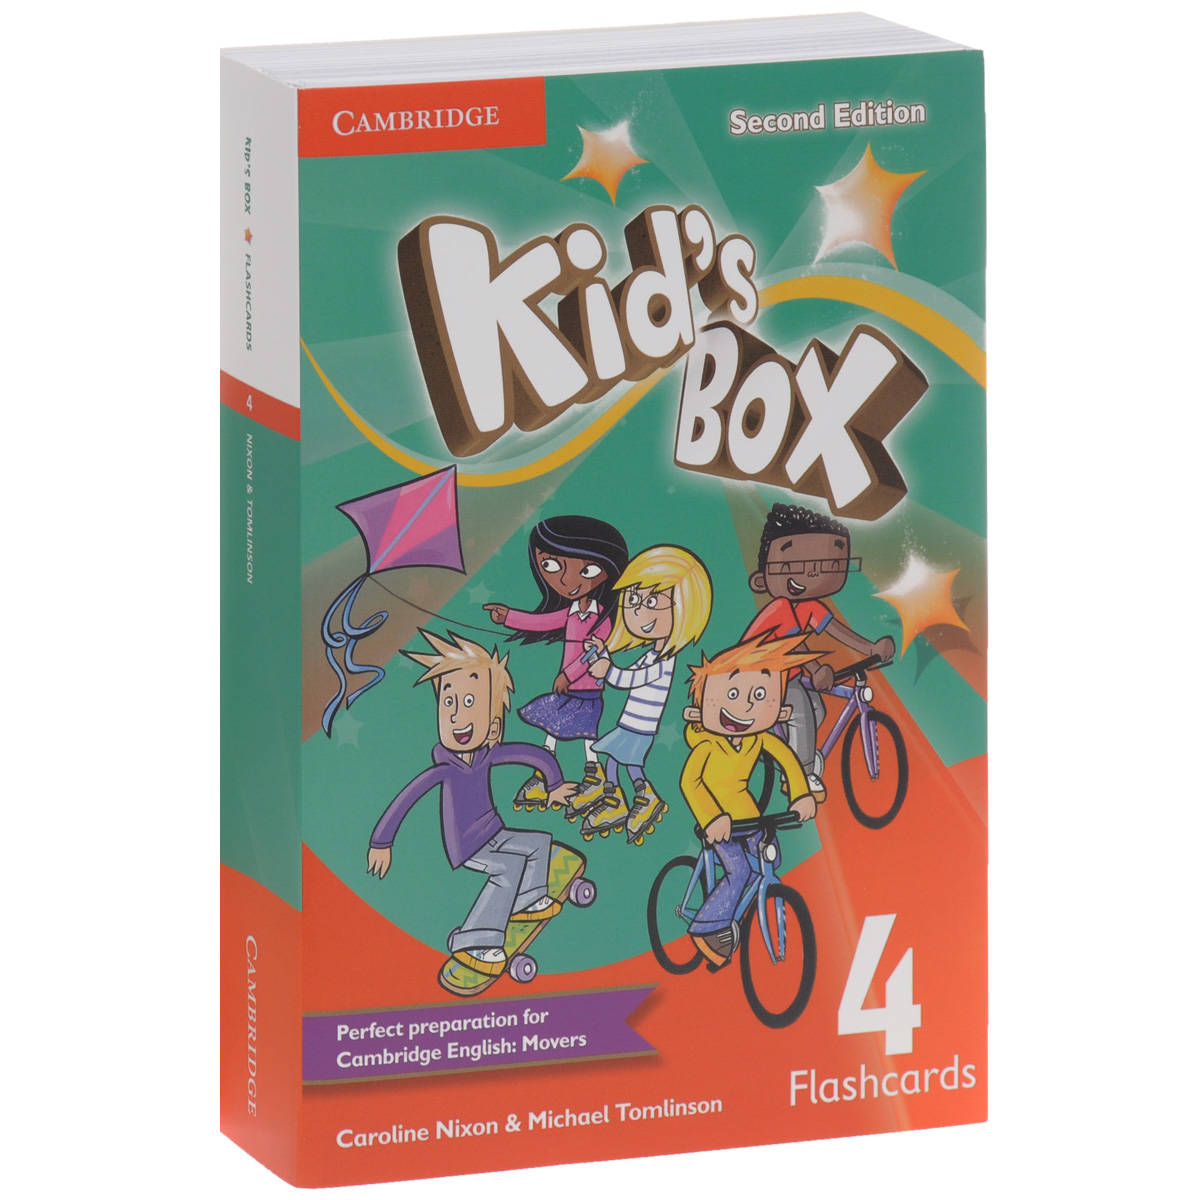 Kids box 4 activity book. Kids Box 4. Merry Team 1 Flashcards. Kids Box 4 Flashcards. Kids Box 2.